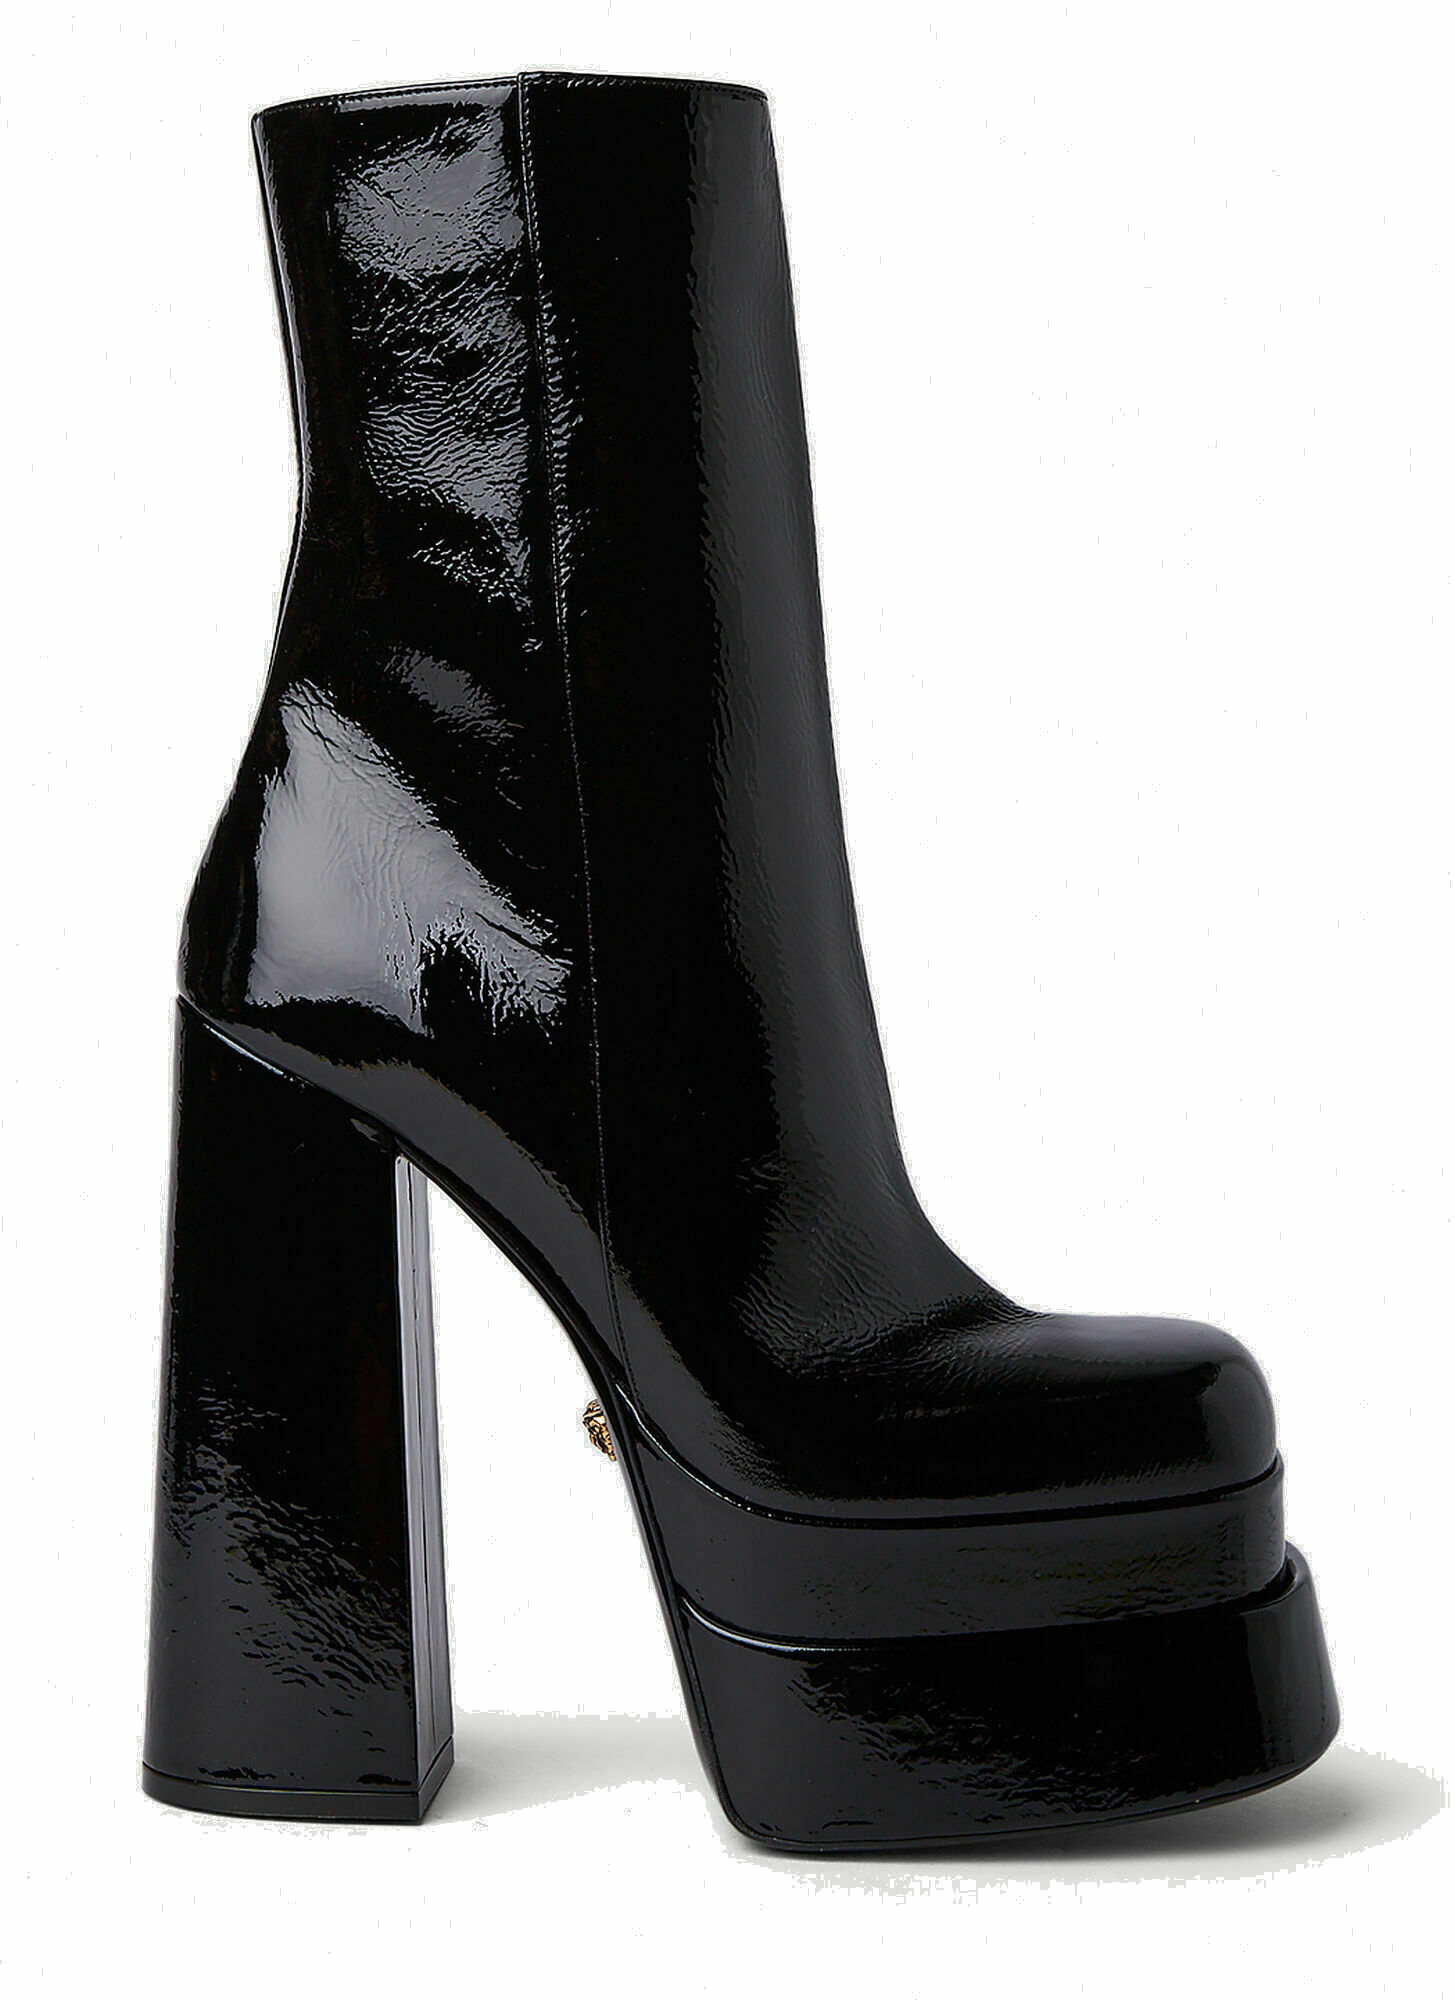 Photo: Aevitas Patent Platform Boots in Black